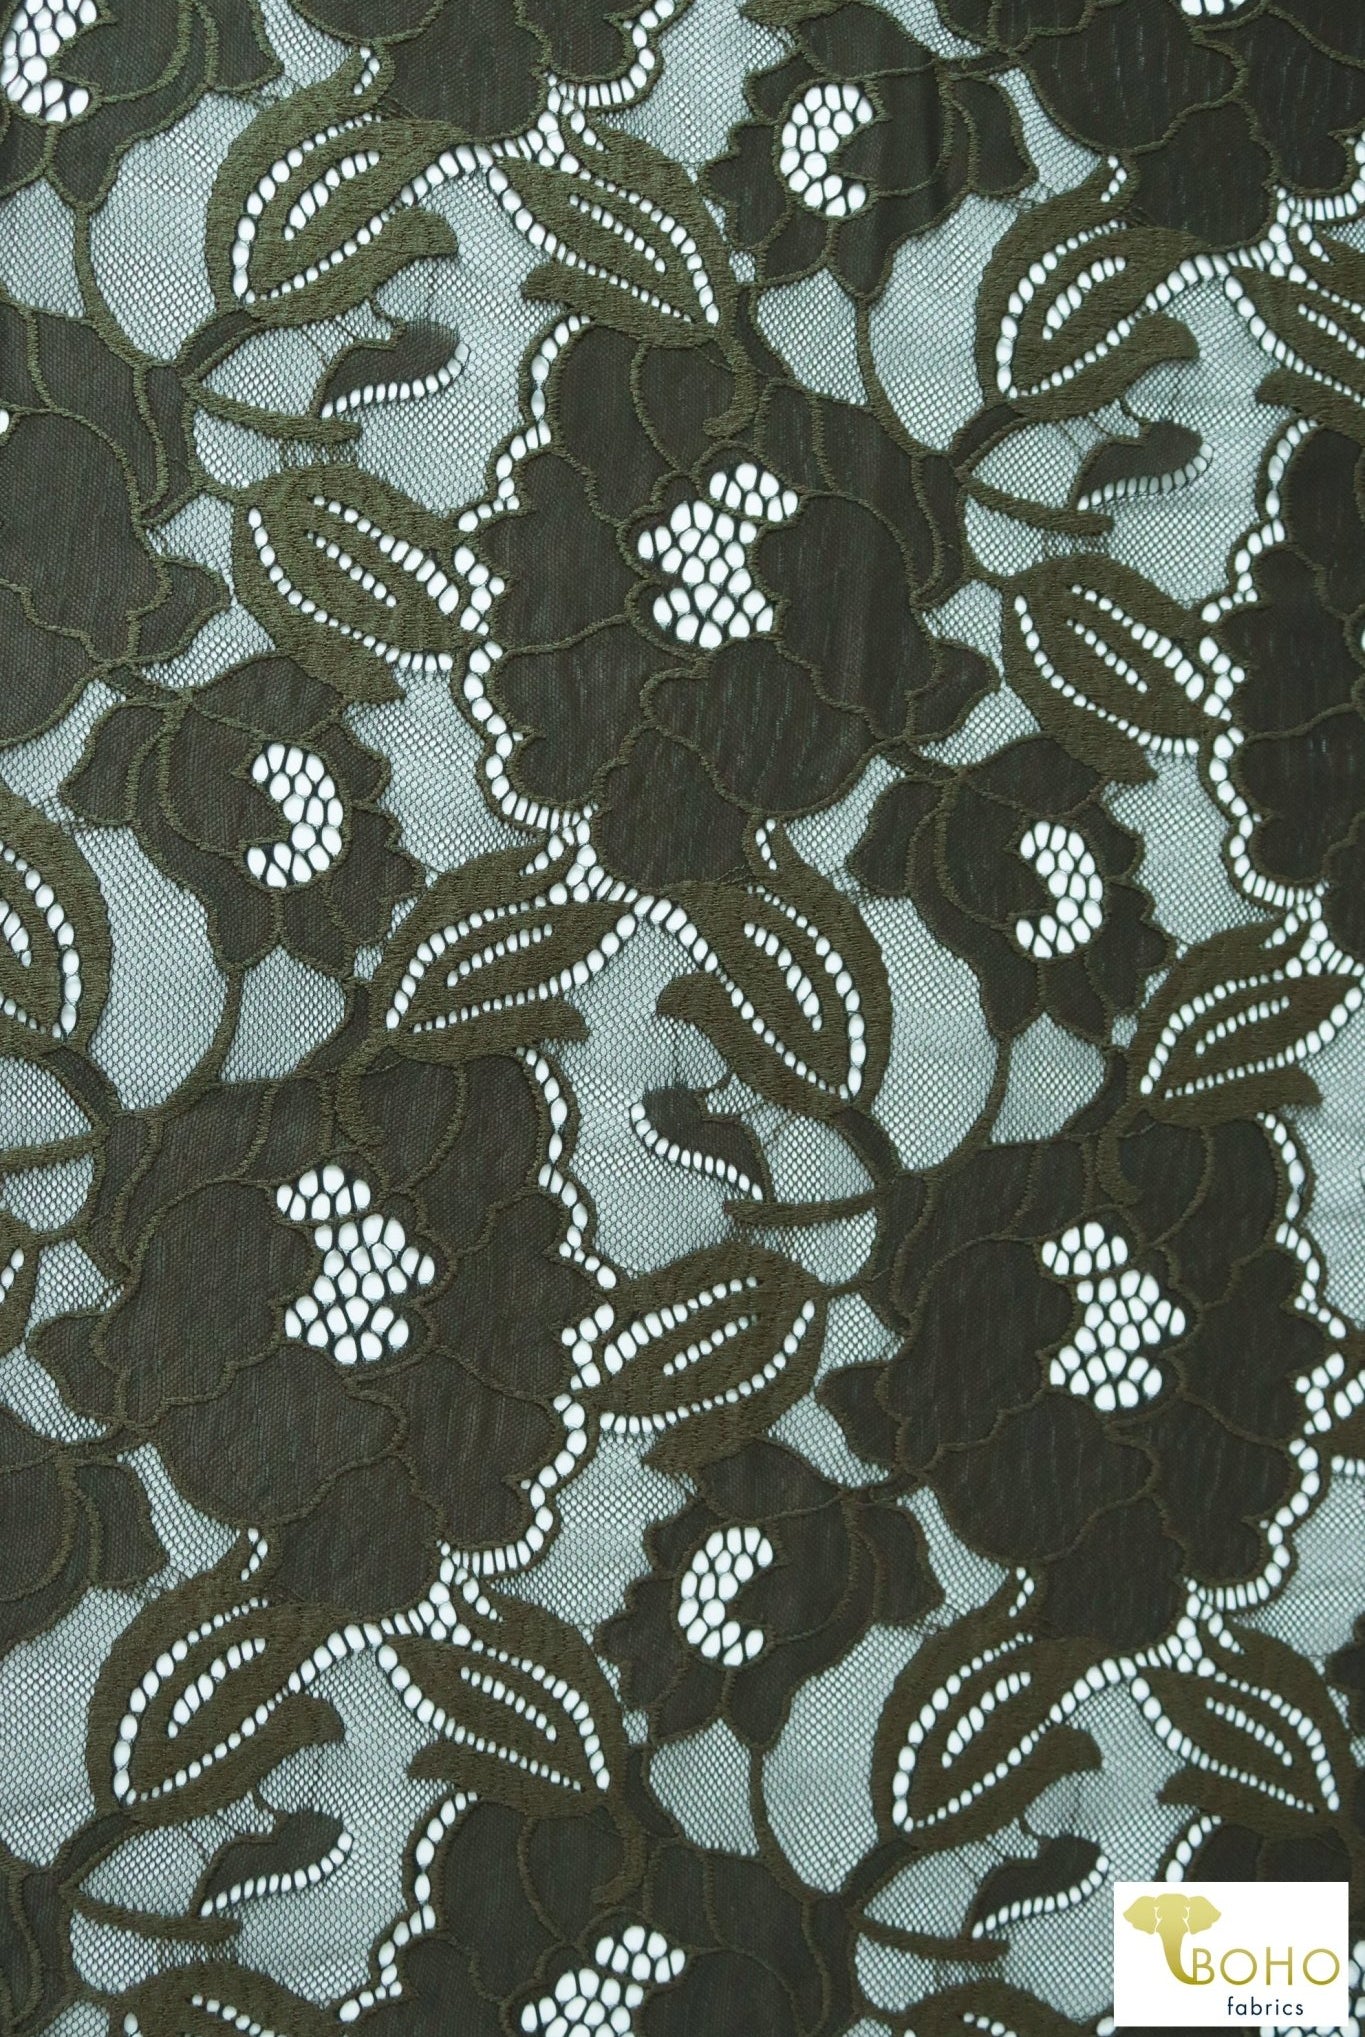 Peony Petals in Green. Stretch Lace Fabric. SL-127-GRN - Boho Fabrics